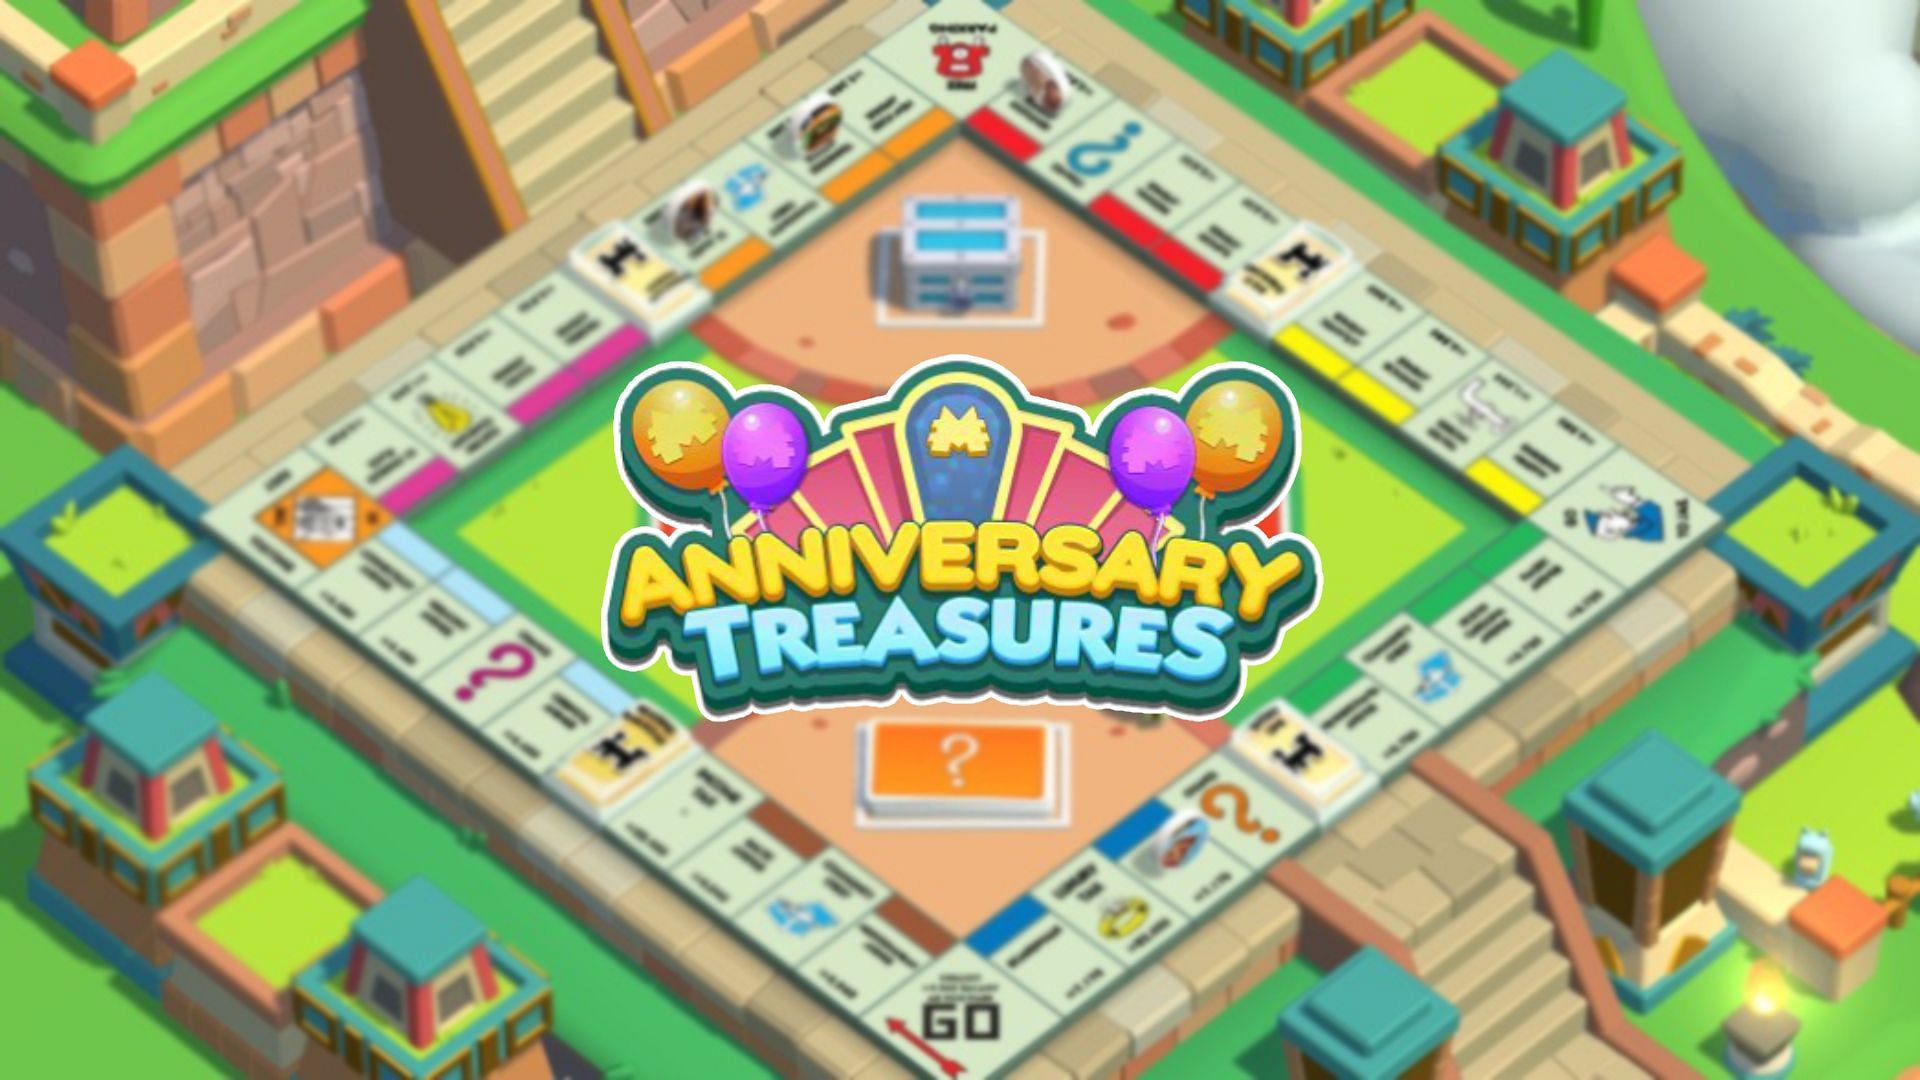 Monopoly Go Anniversary Treasures Dig Event